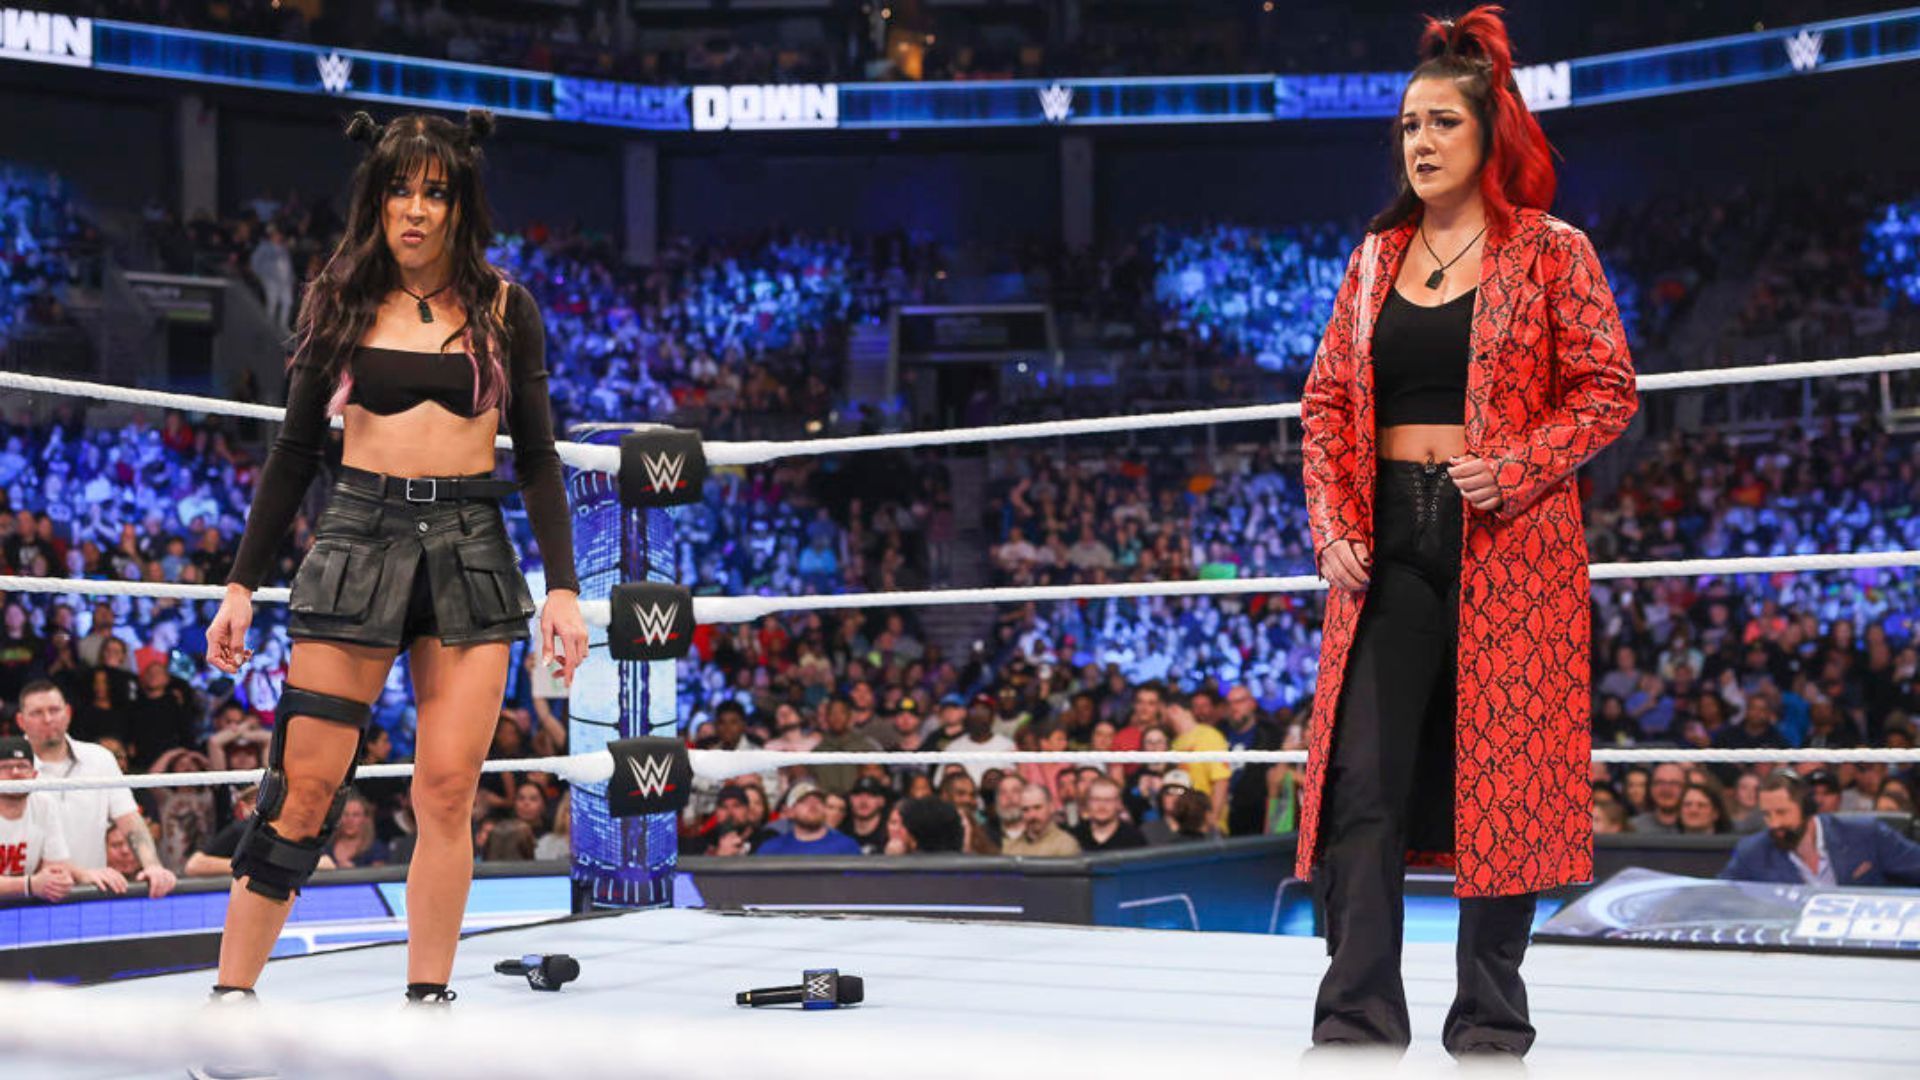 Dakota Kai sided with Bayley on SmackDown